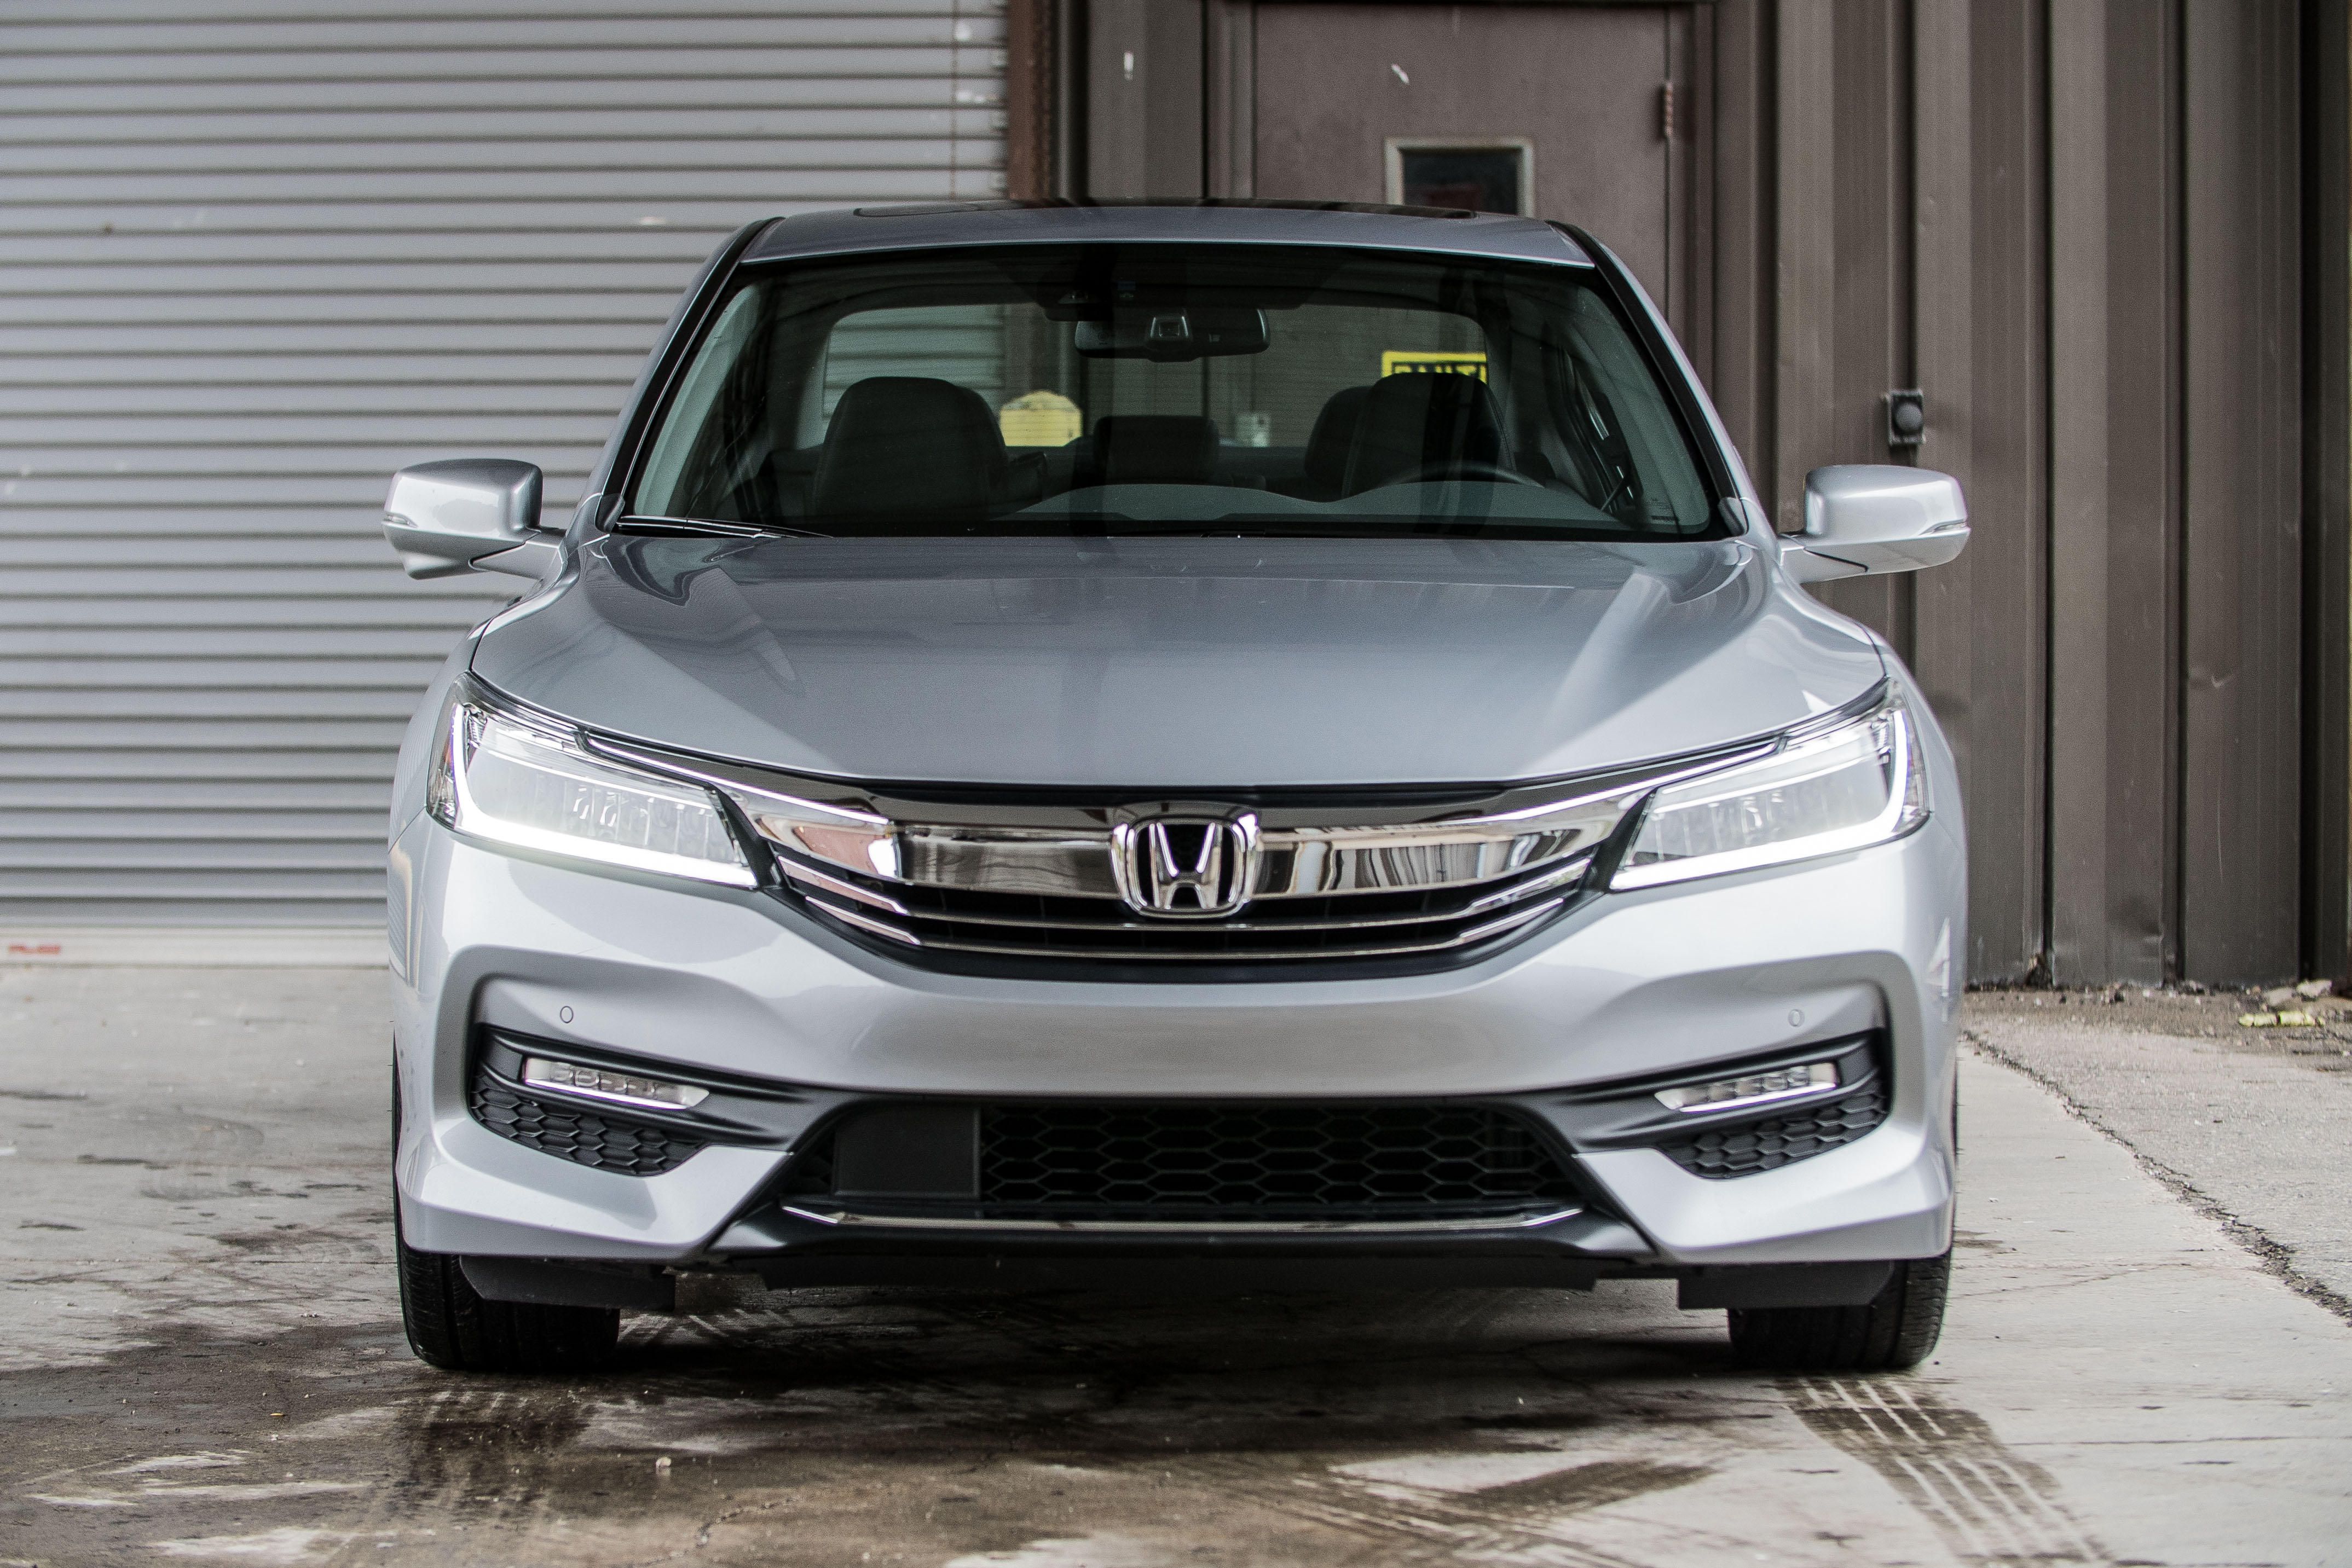 Honda Accord Sedan mod photo